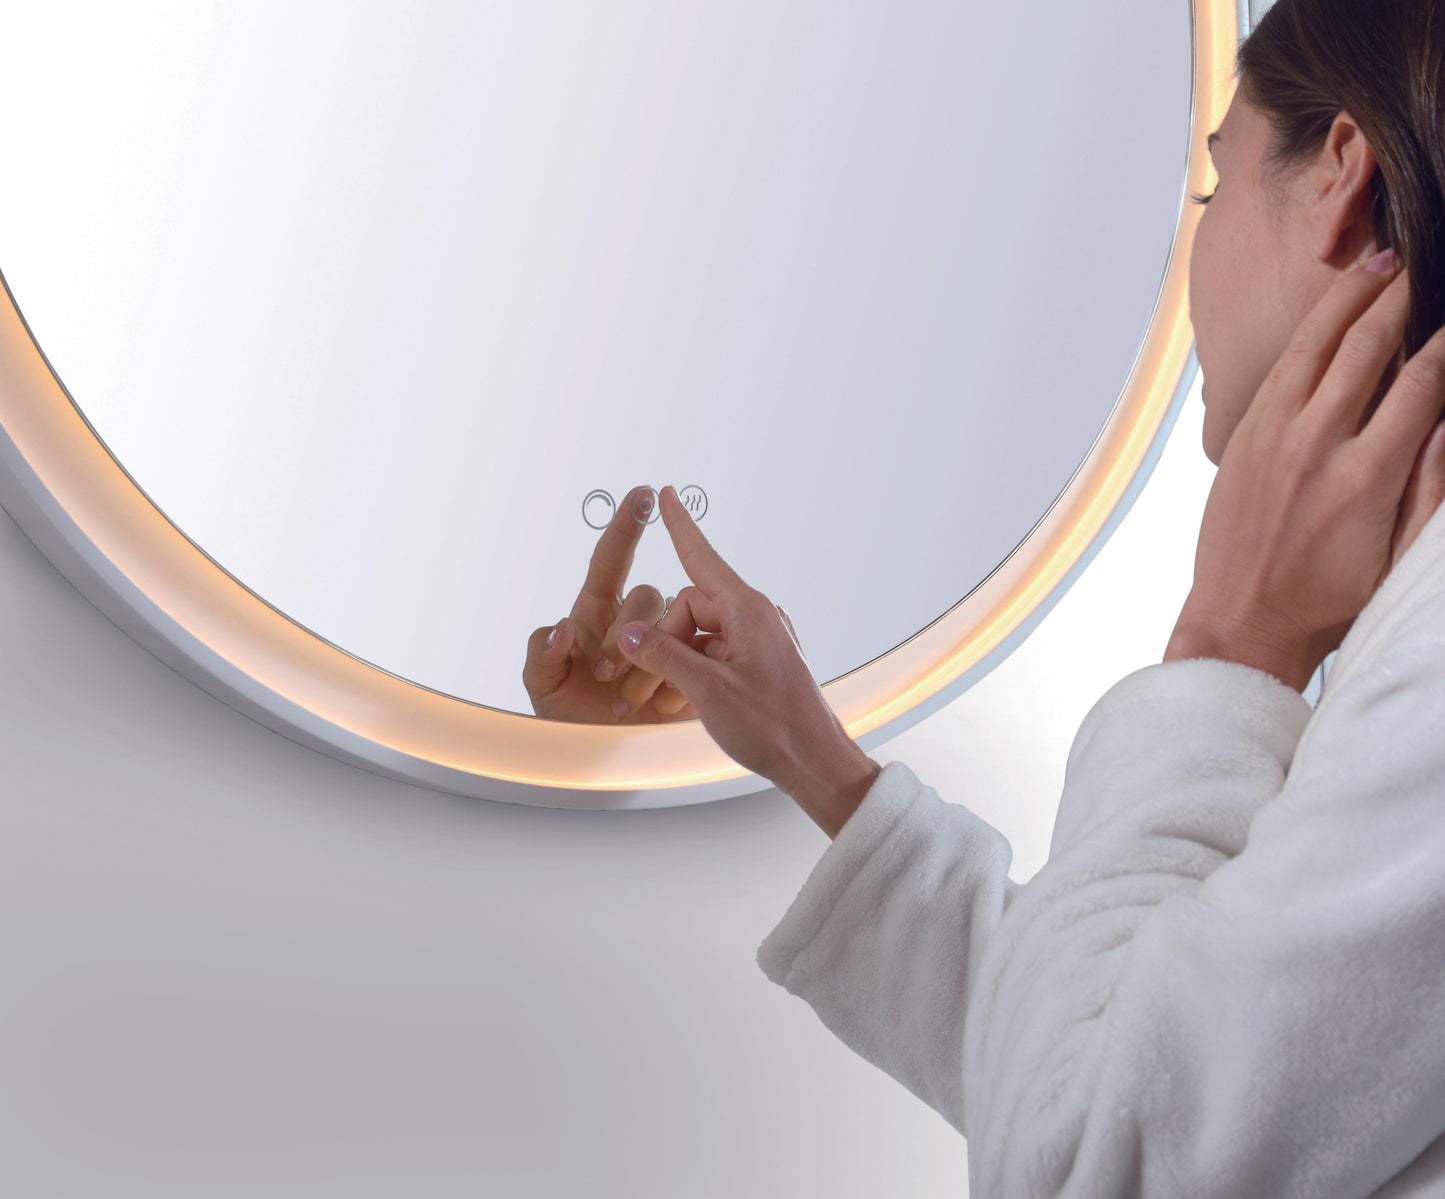 Remer Eclipse Frontlit Bathroom Mirror